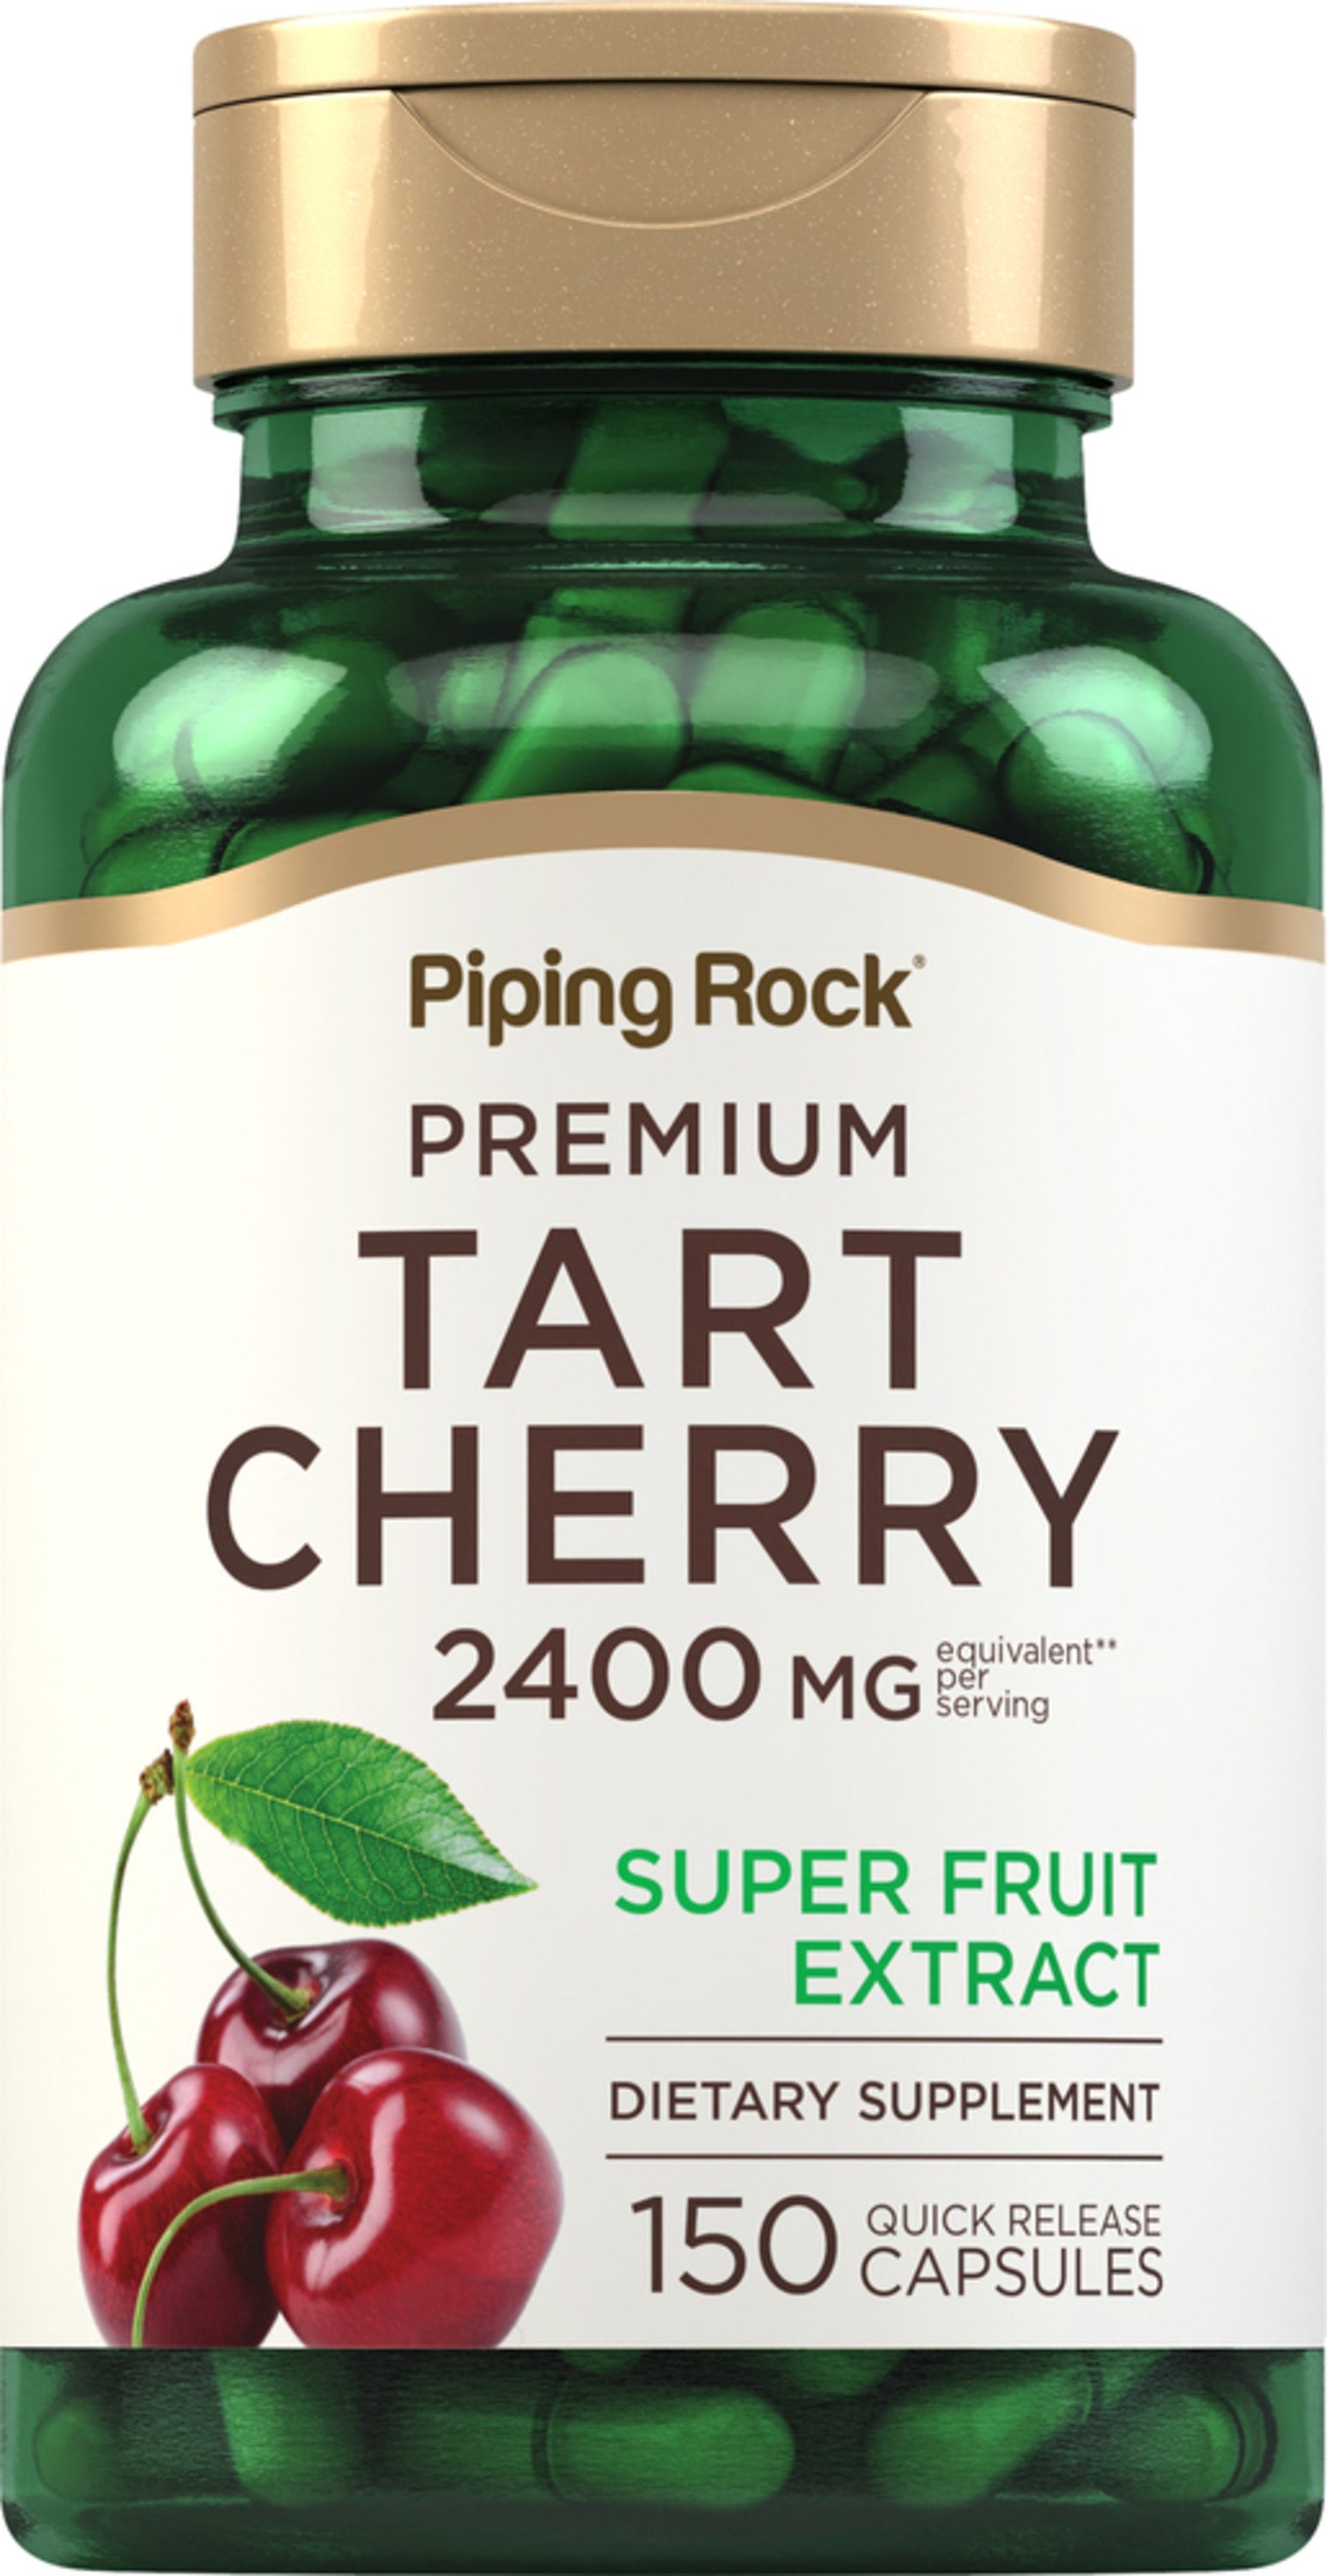 Tart Cherry, 2400 mg (per serving), 150 Quick Release Capsules